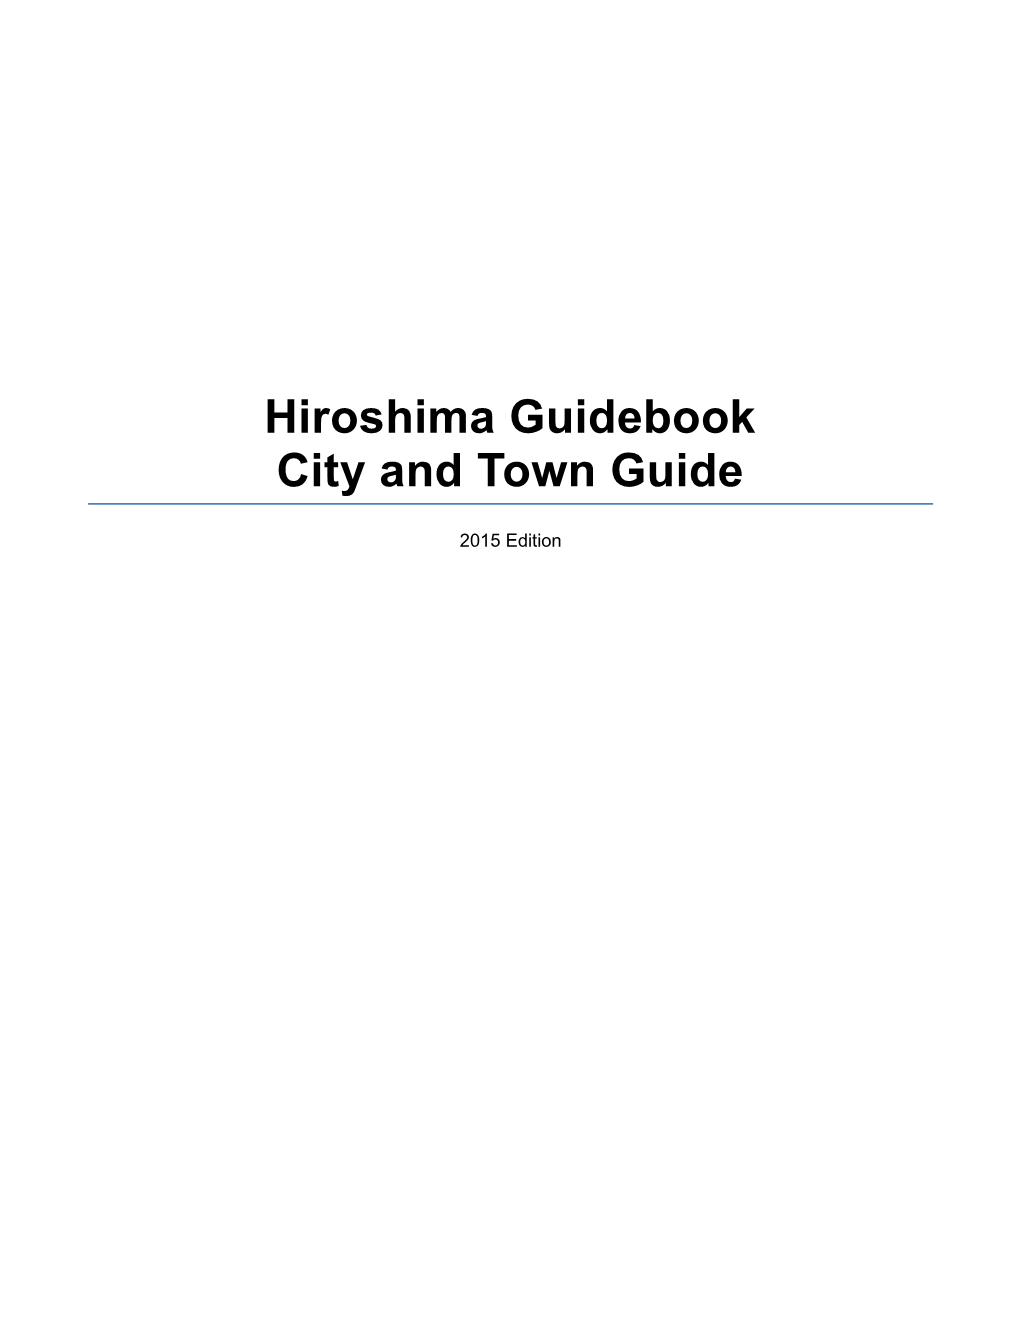 Hiroshima Guidebook City and Town Guide